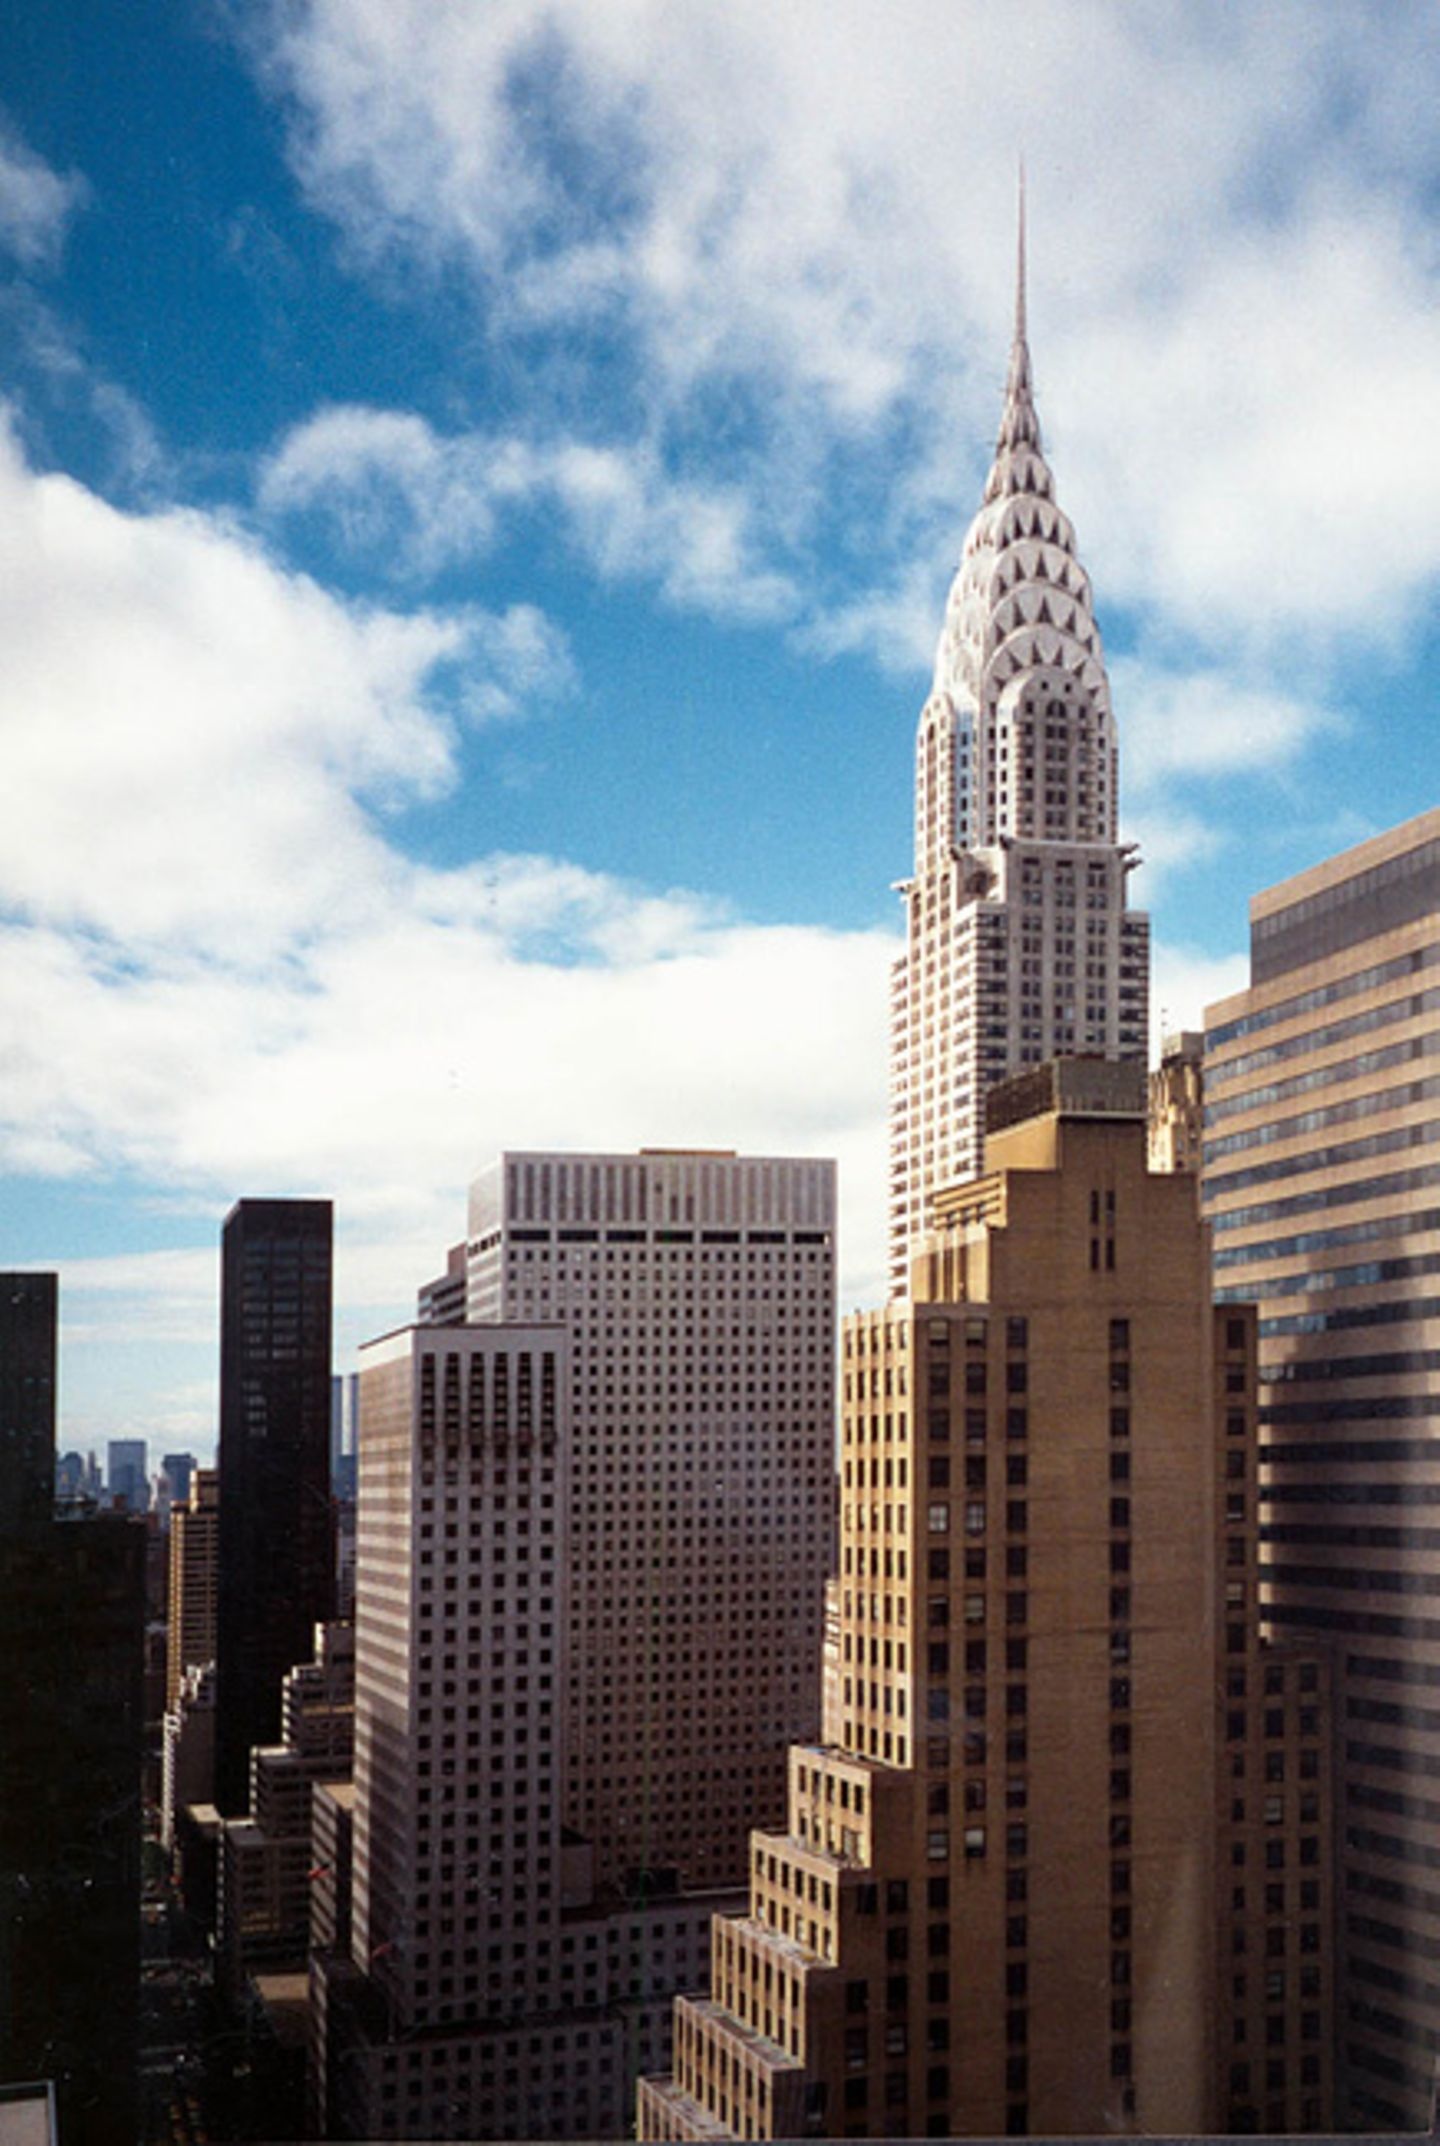 Chrysler Building: The skyscraper measures 1,046 feet (319 meters) in height. 1440x2150 HD Wallpaper.